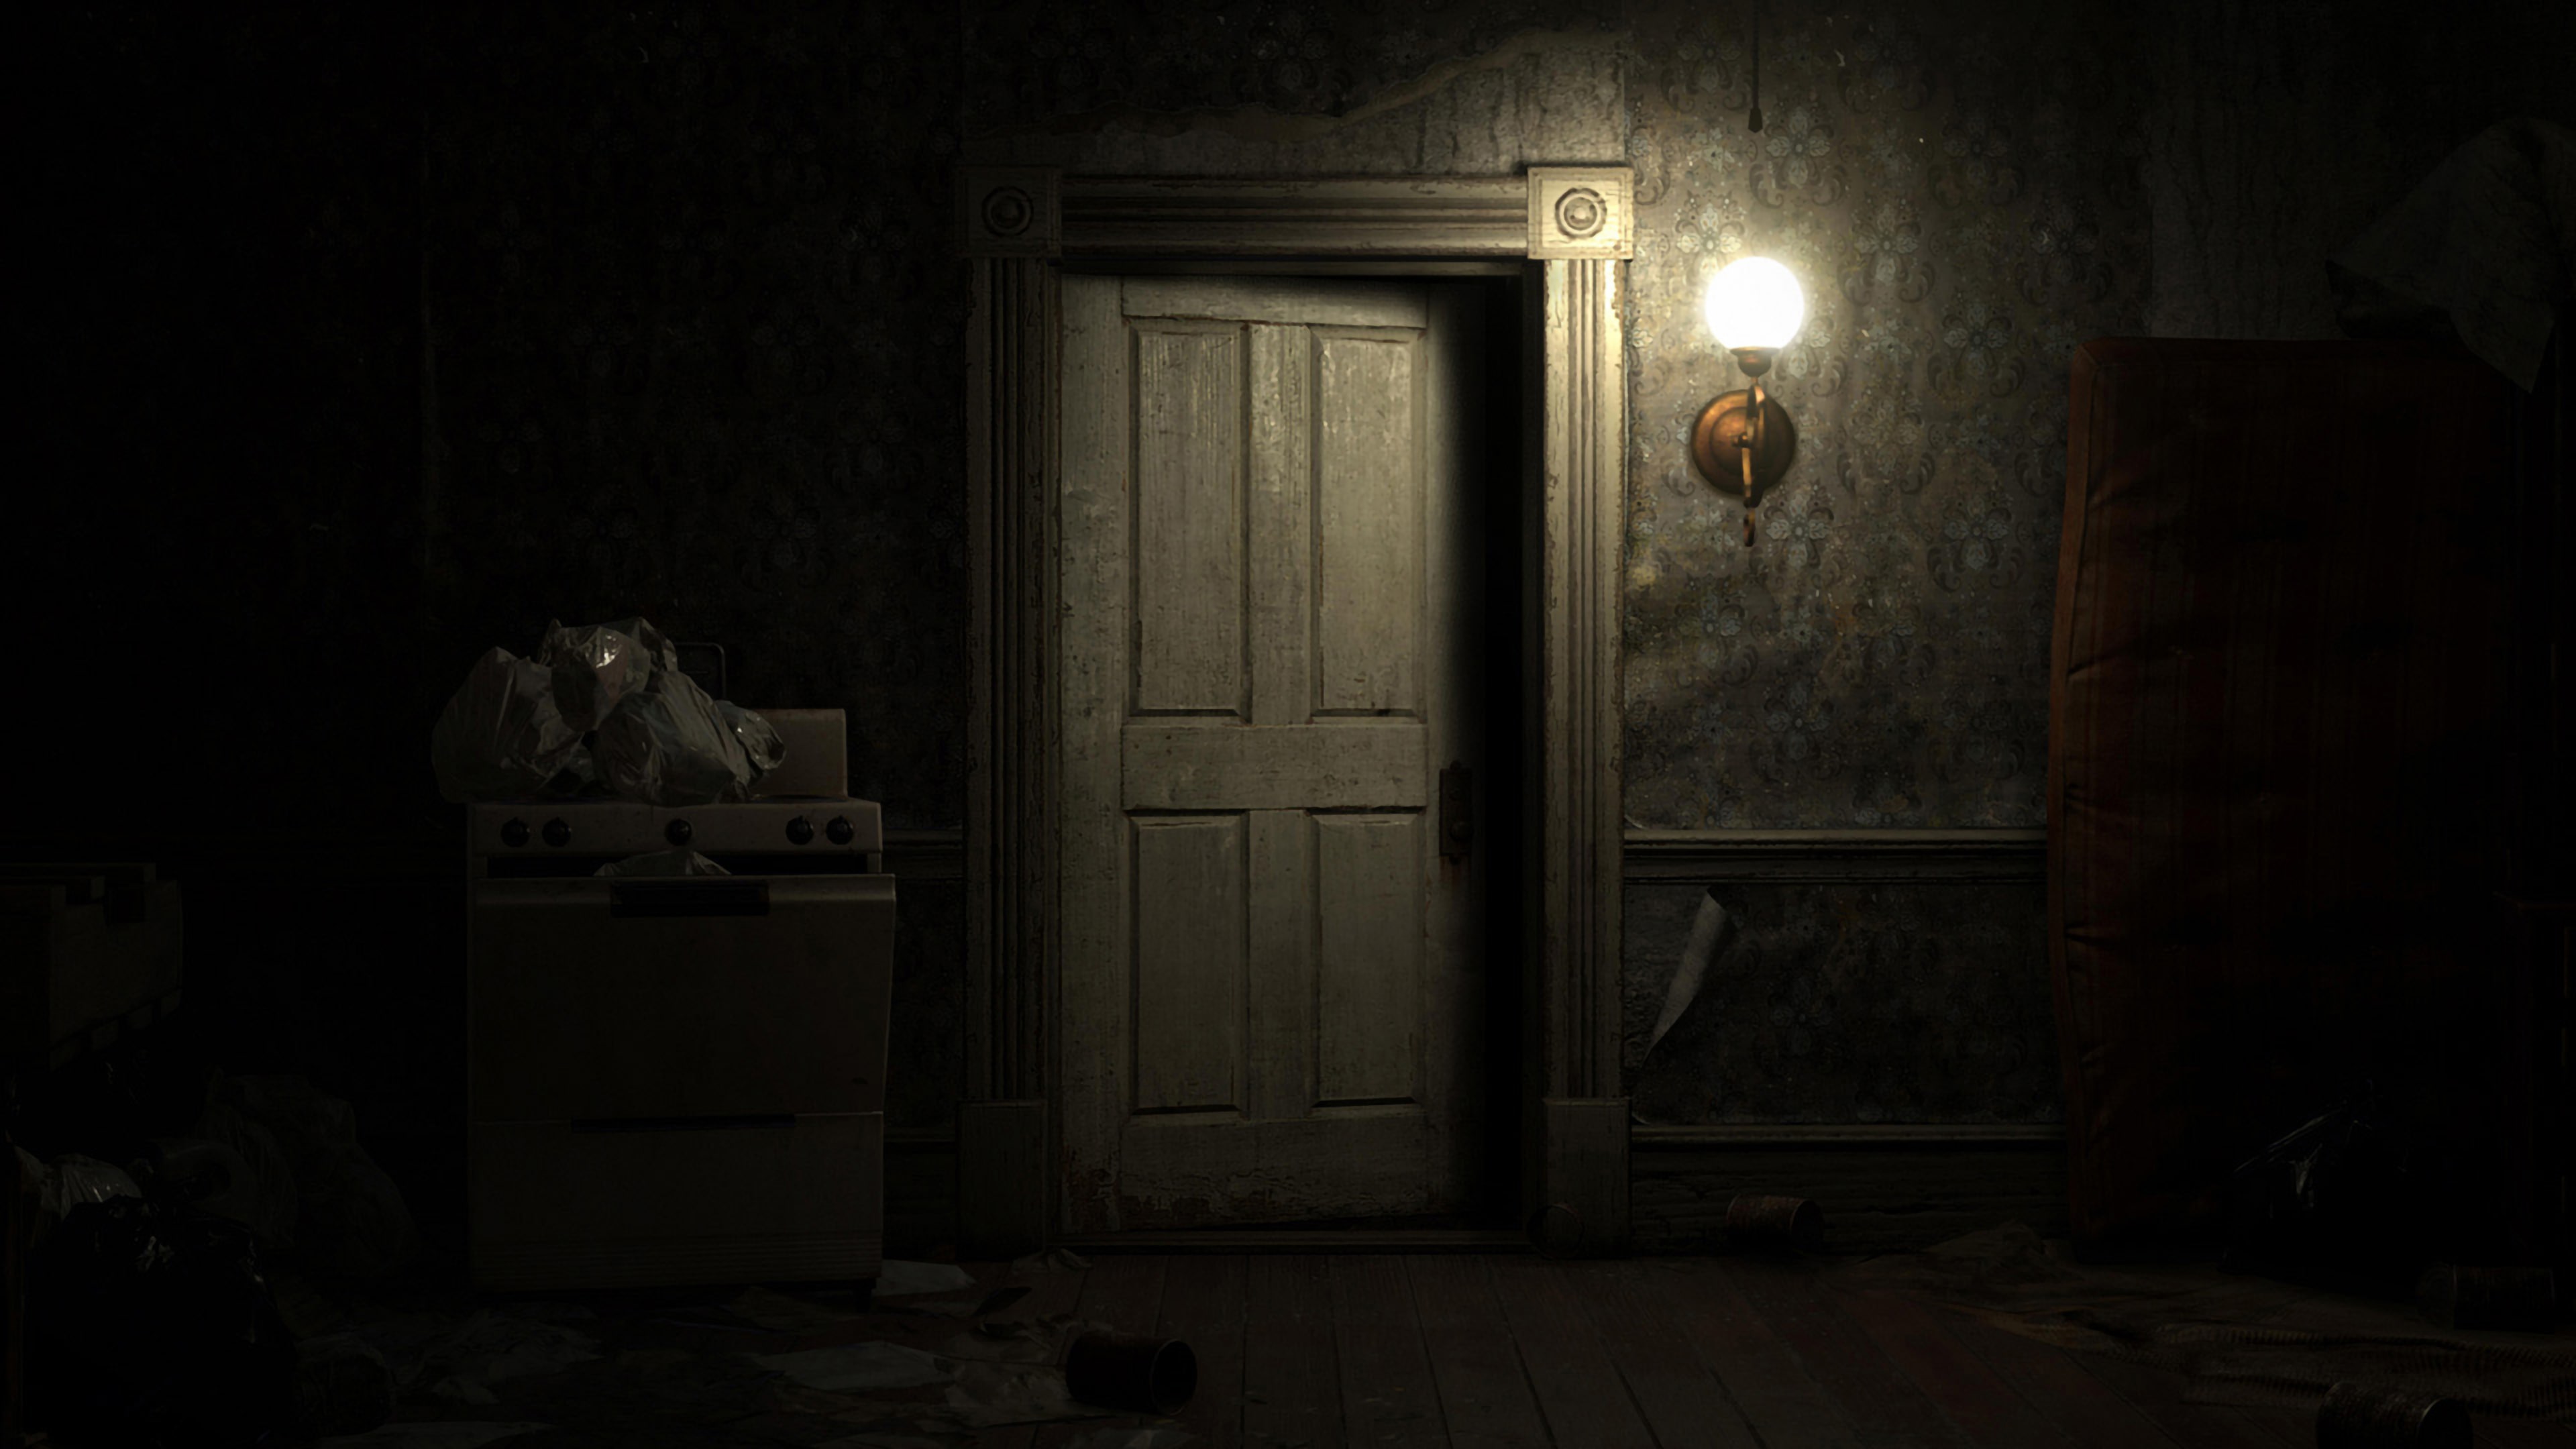 Resident Evil 7 : Biohazard PS4 - Jeux Neufs/PS4 - golden-games